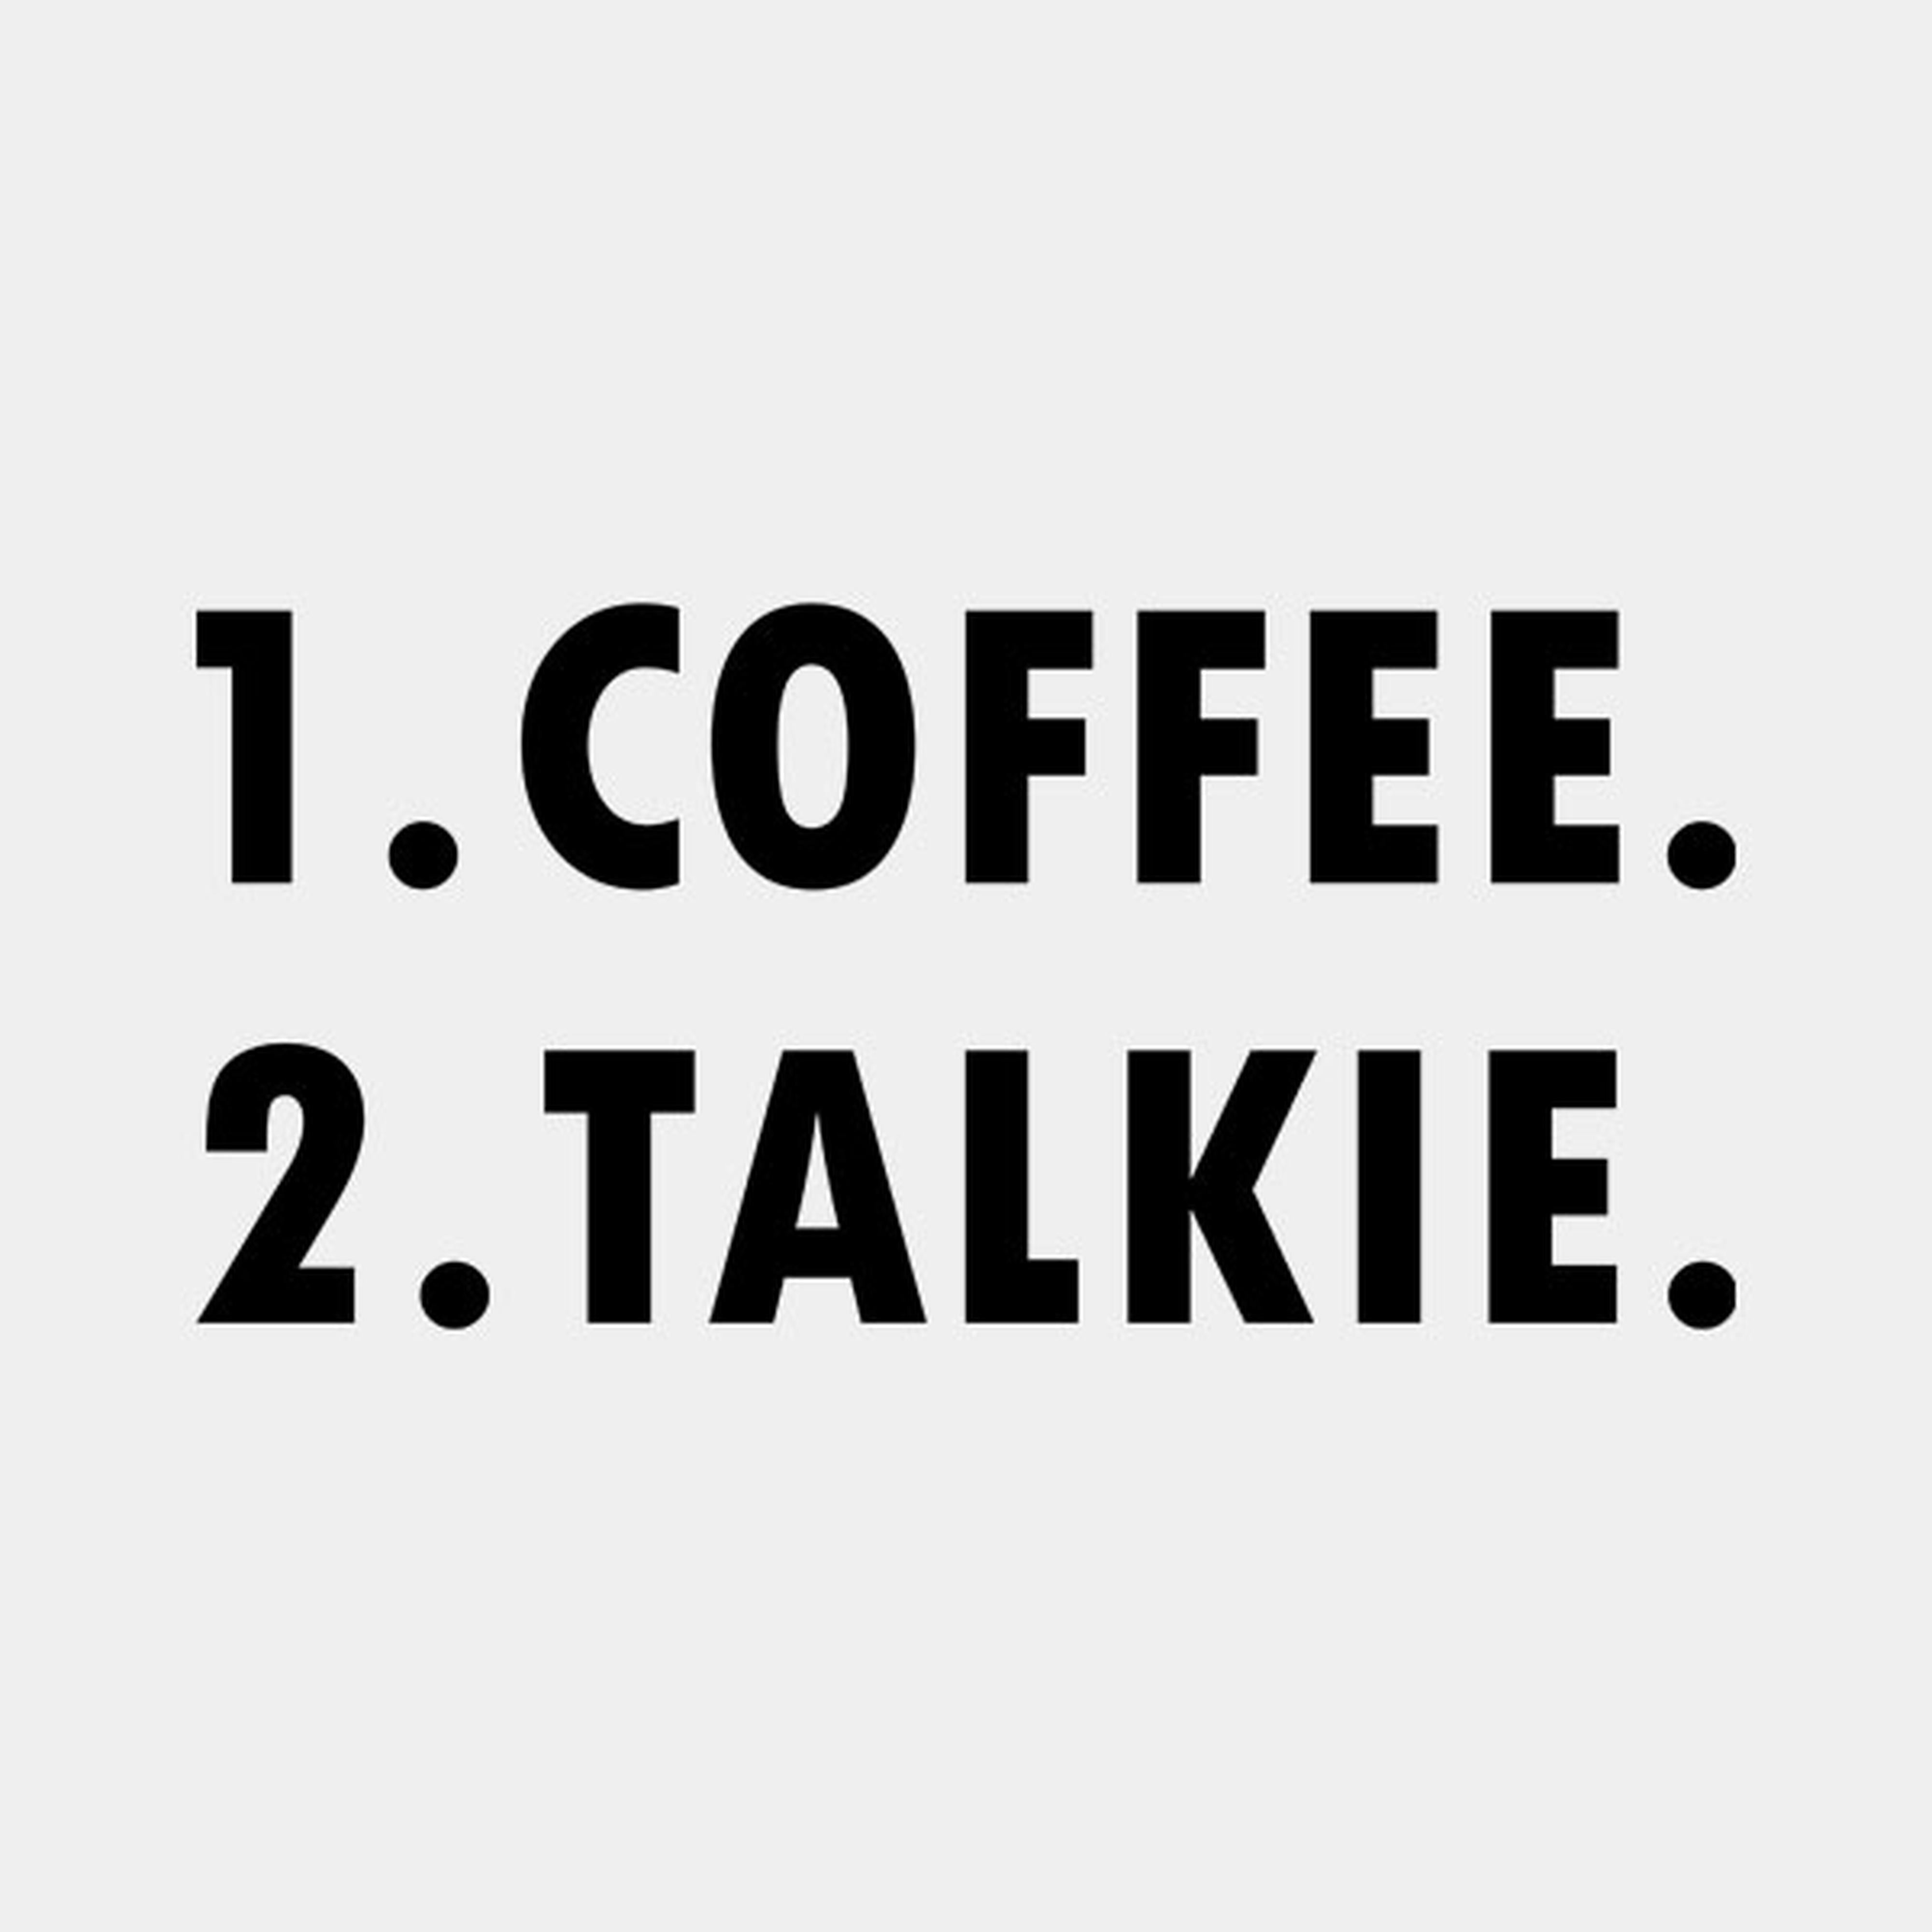 1.Coffee 2.Talkee - T-shirt